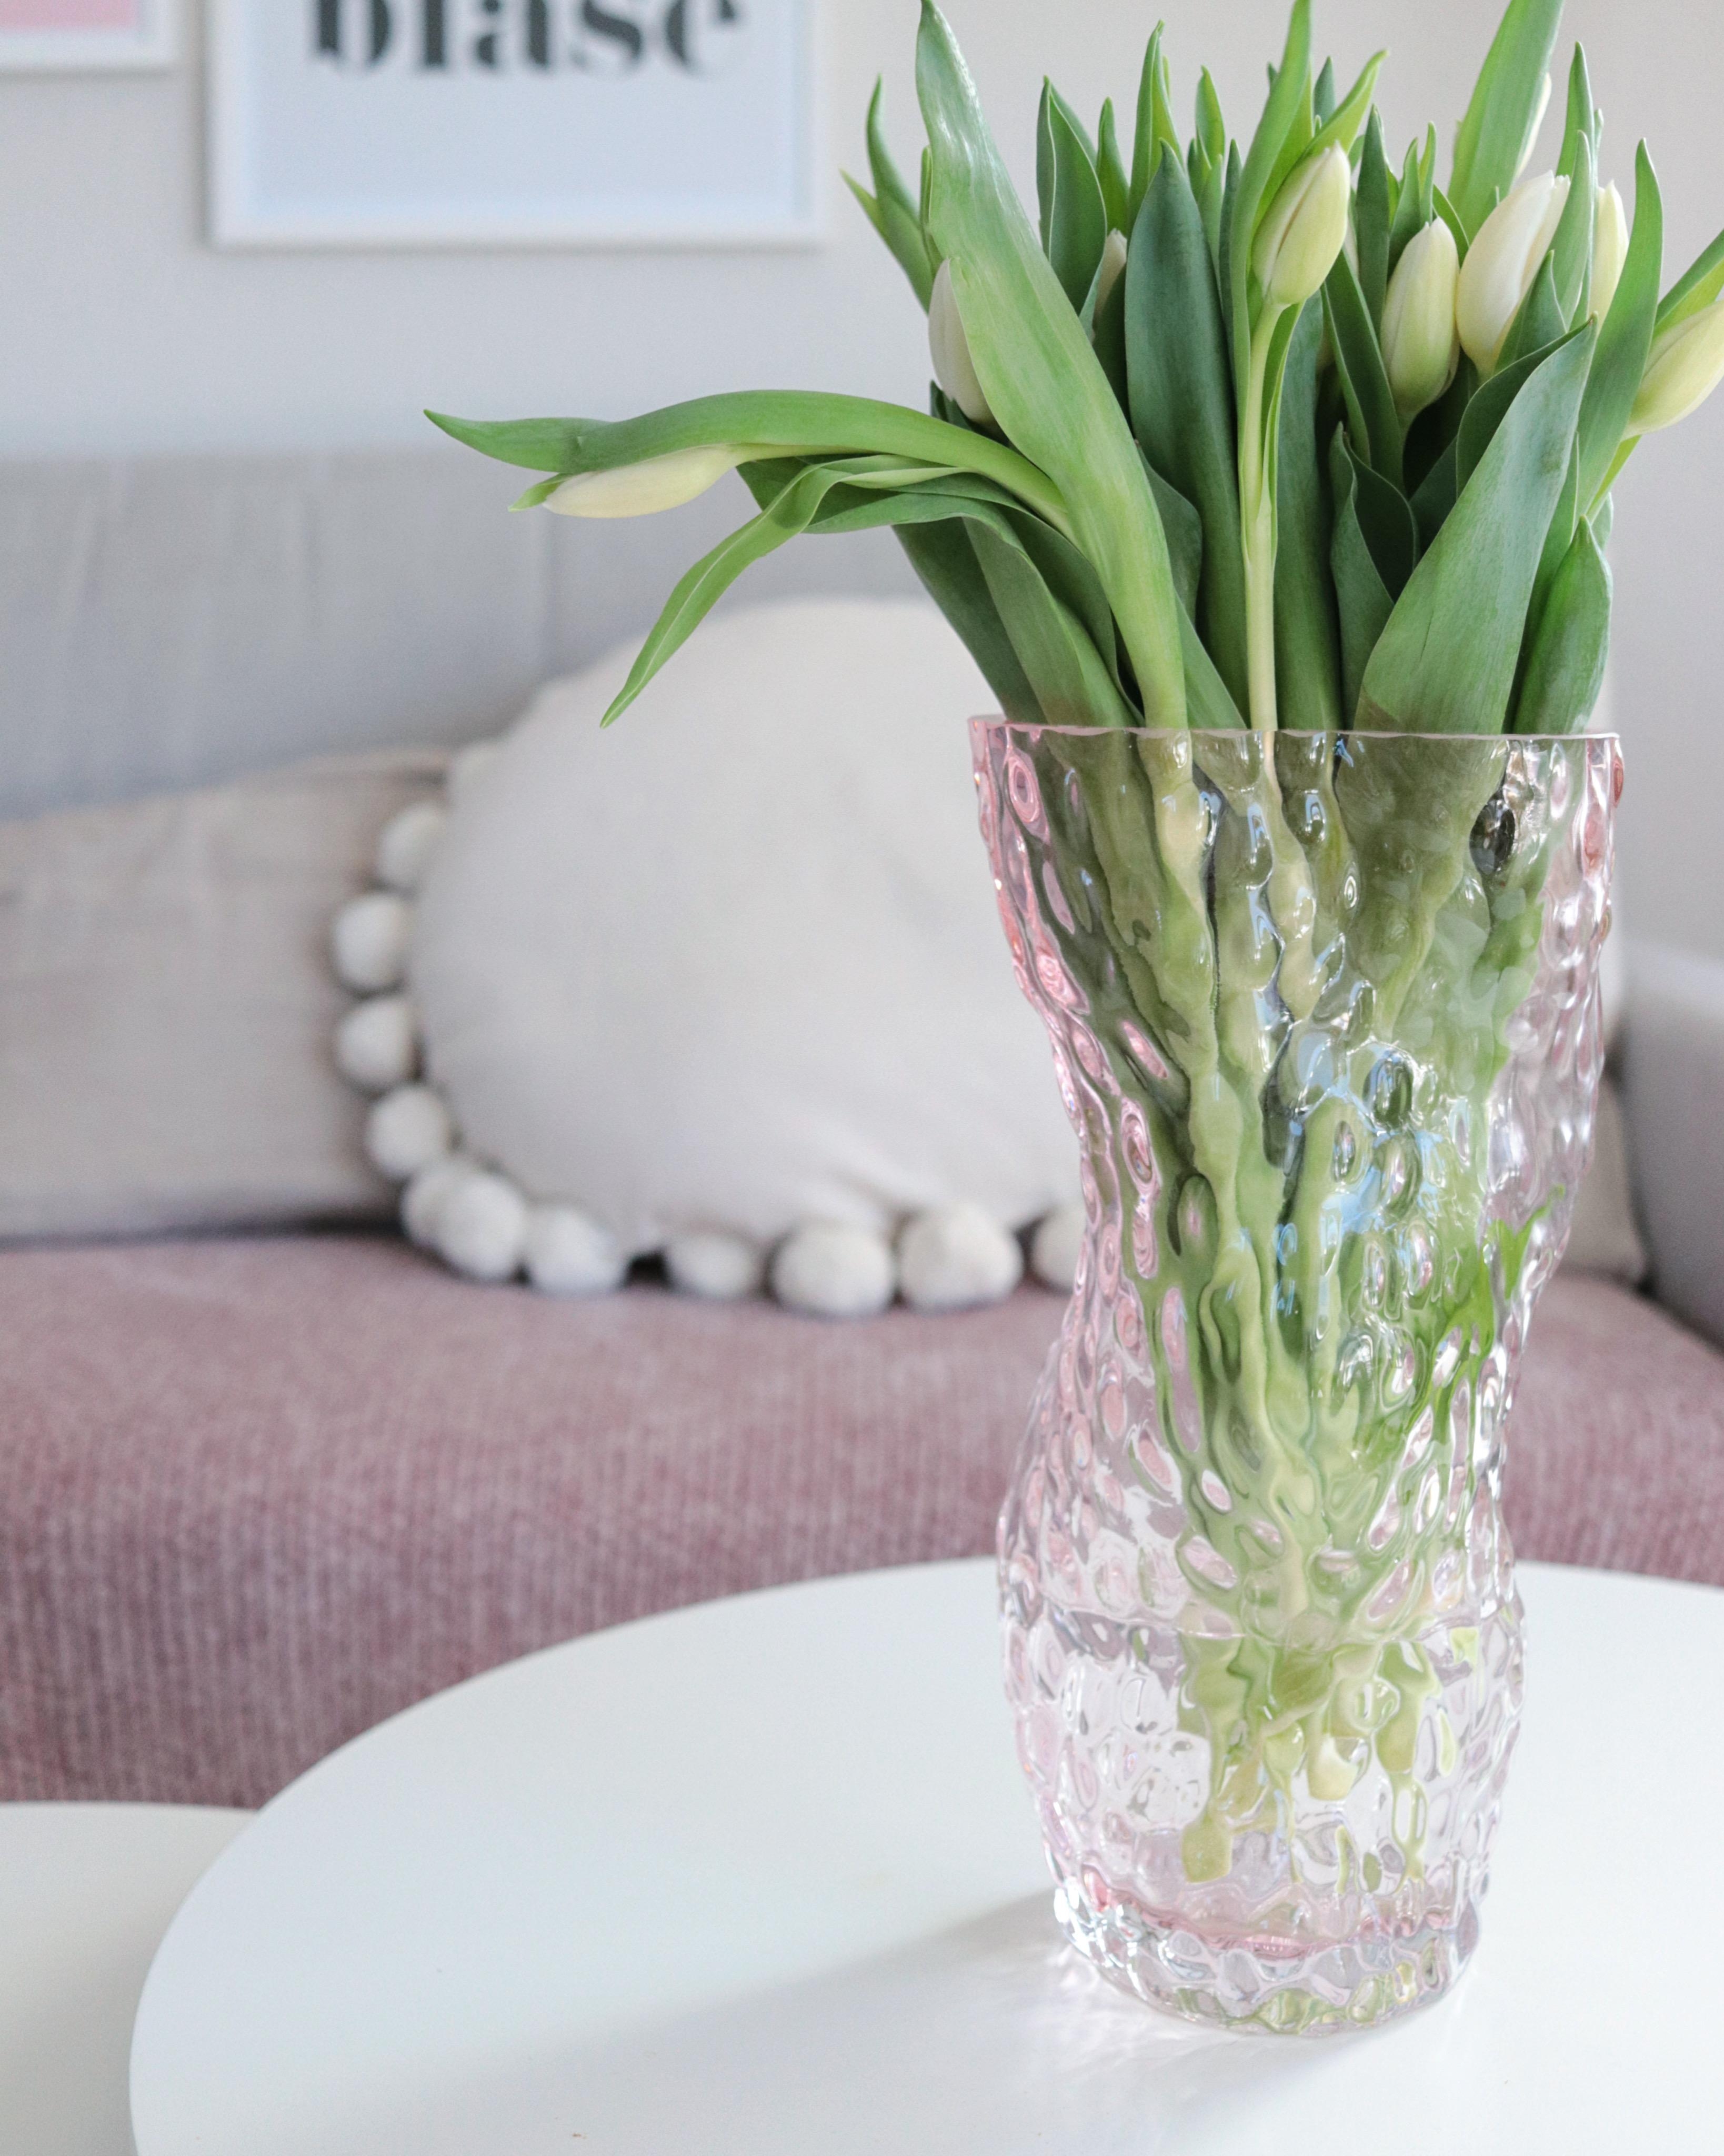 Neue #lieblingsvase 
#ostrearock #vasenliebe #tulpen #wohnzimmer #vase #skandihome